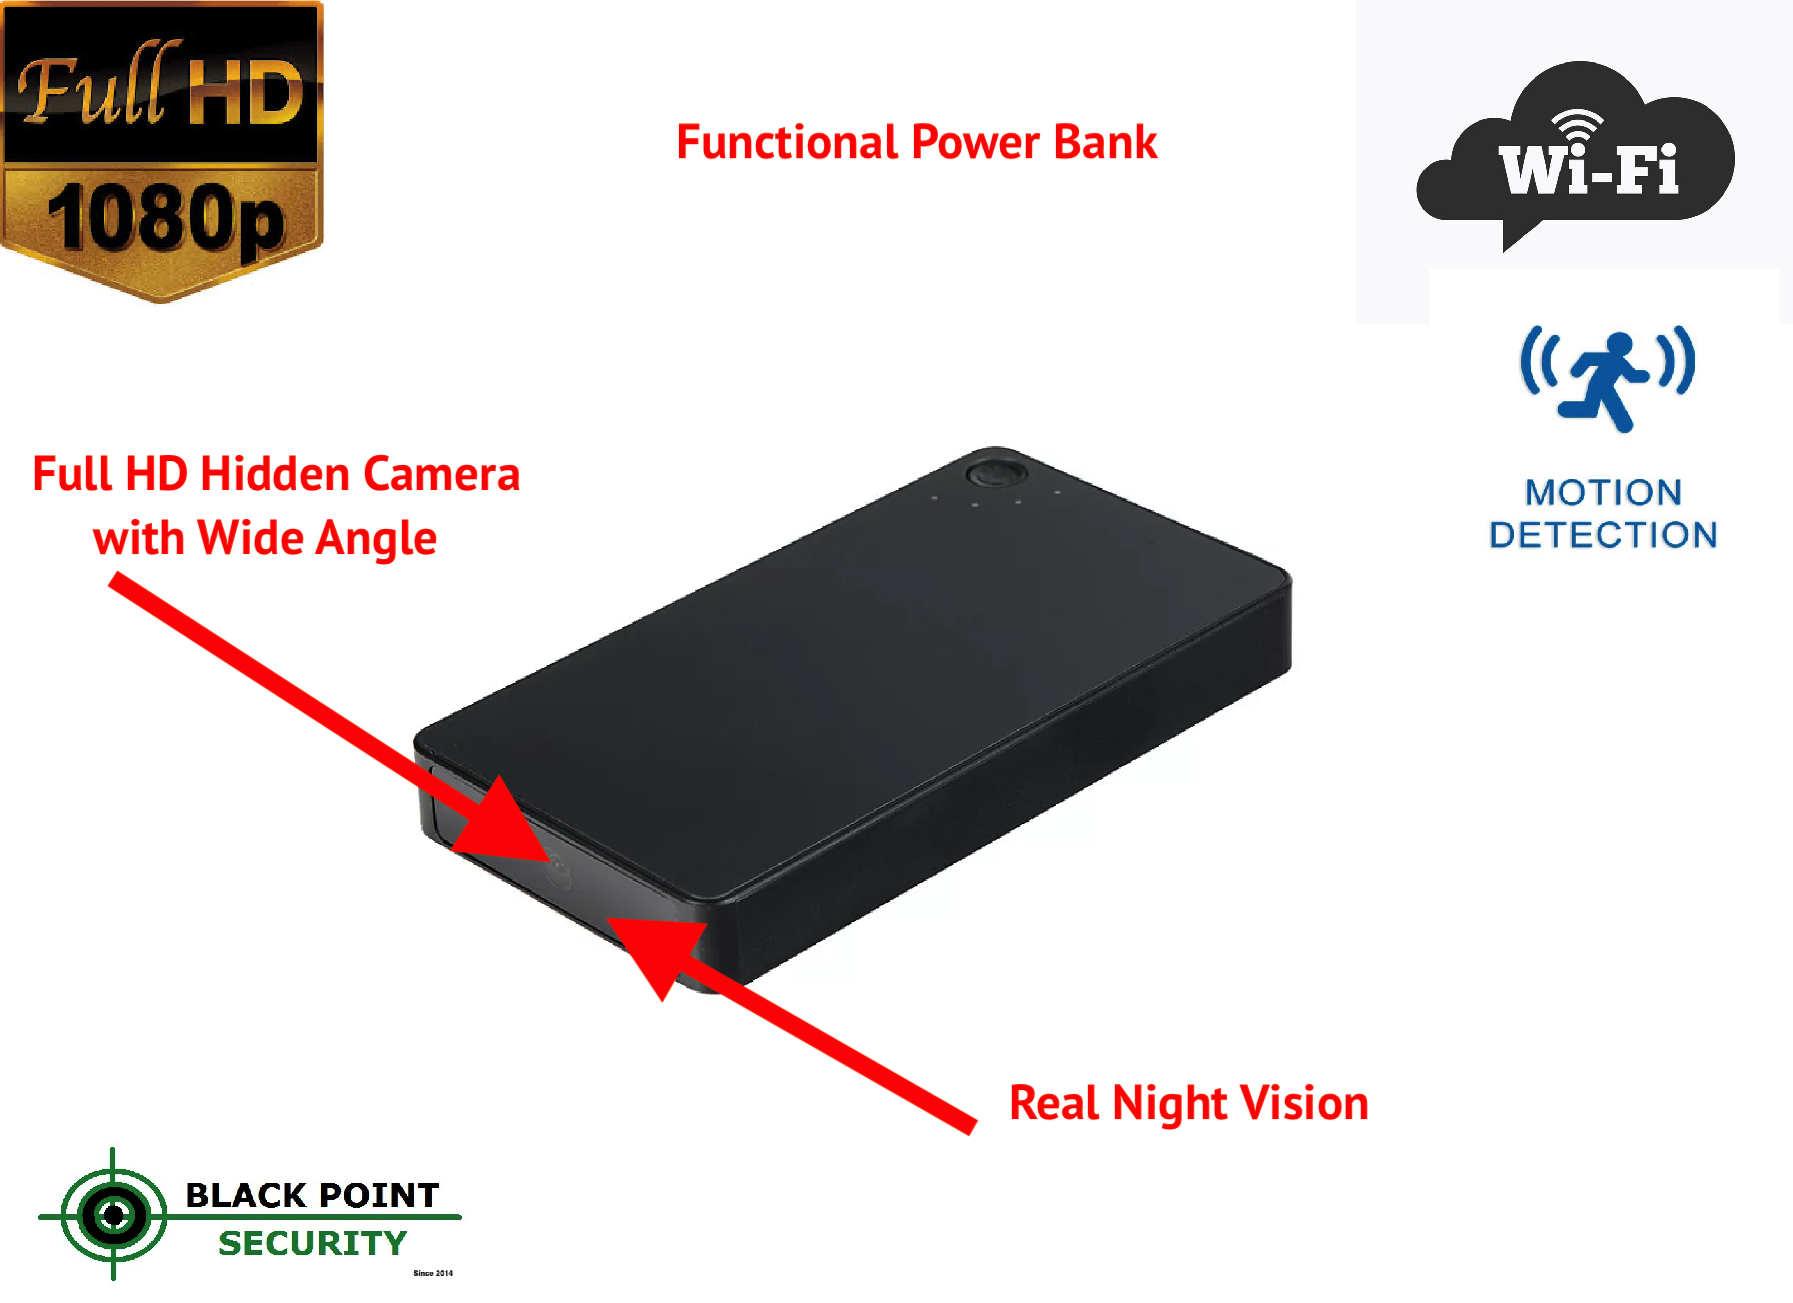 Functional Power Bank with Hidden Camera